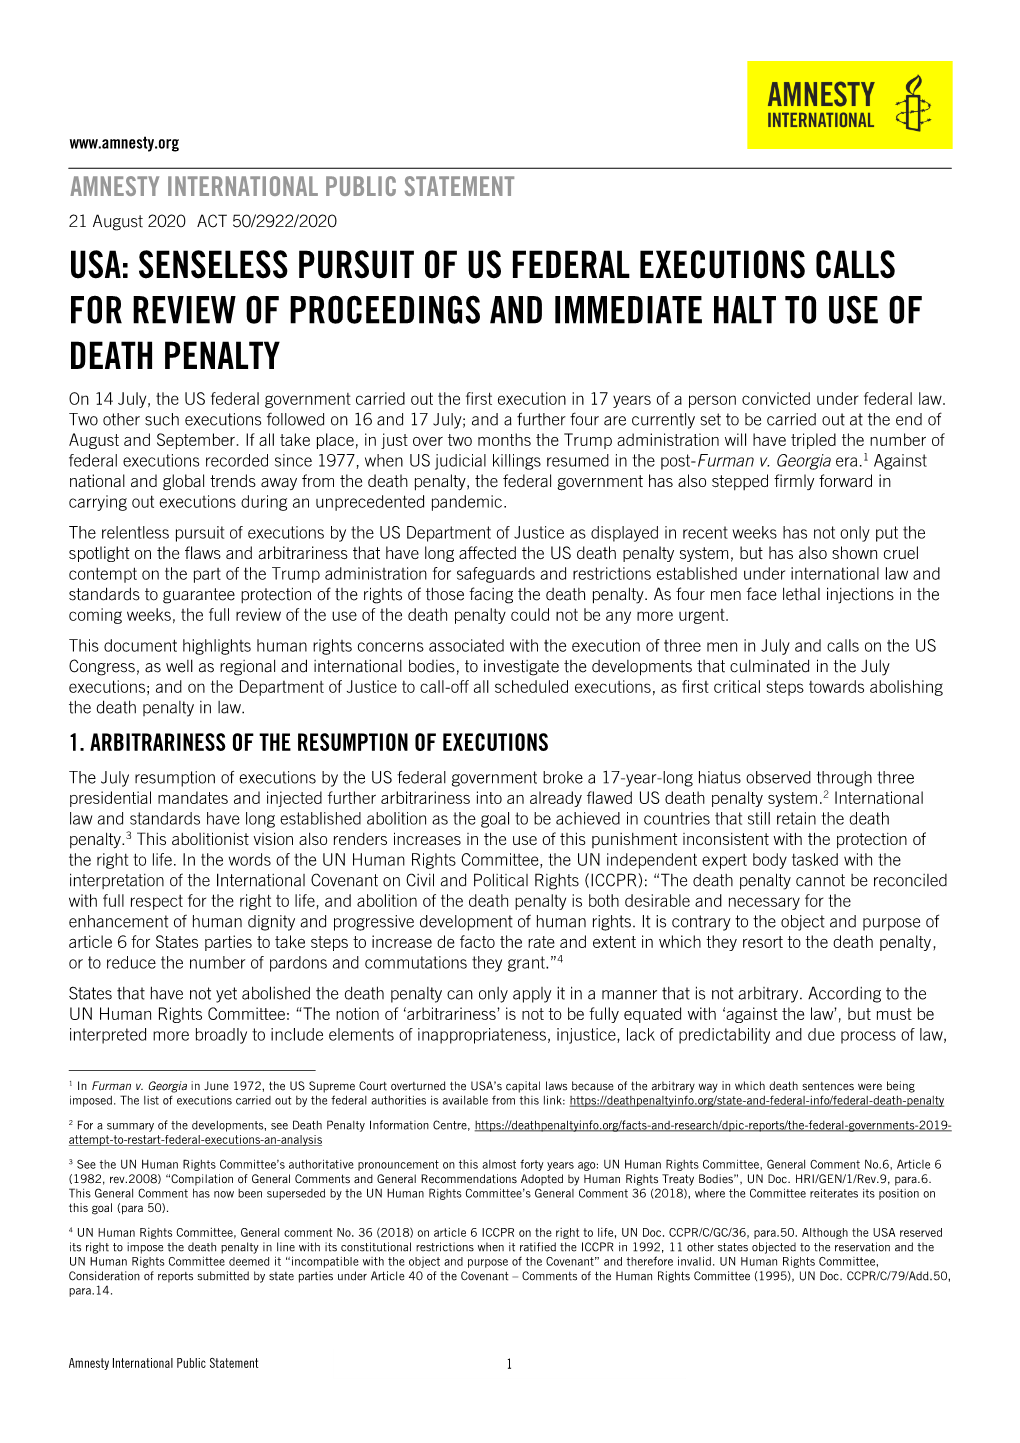 Senseless Pursuit of US Federal Executions